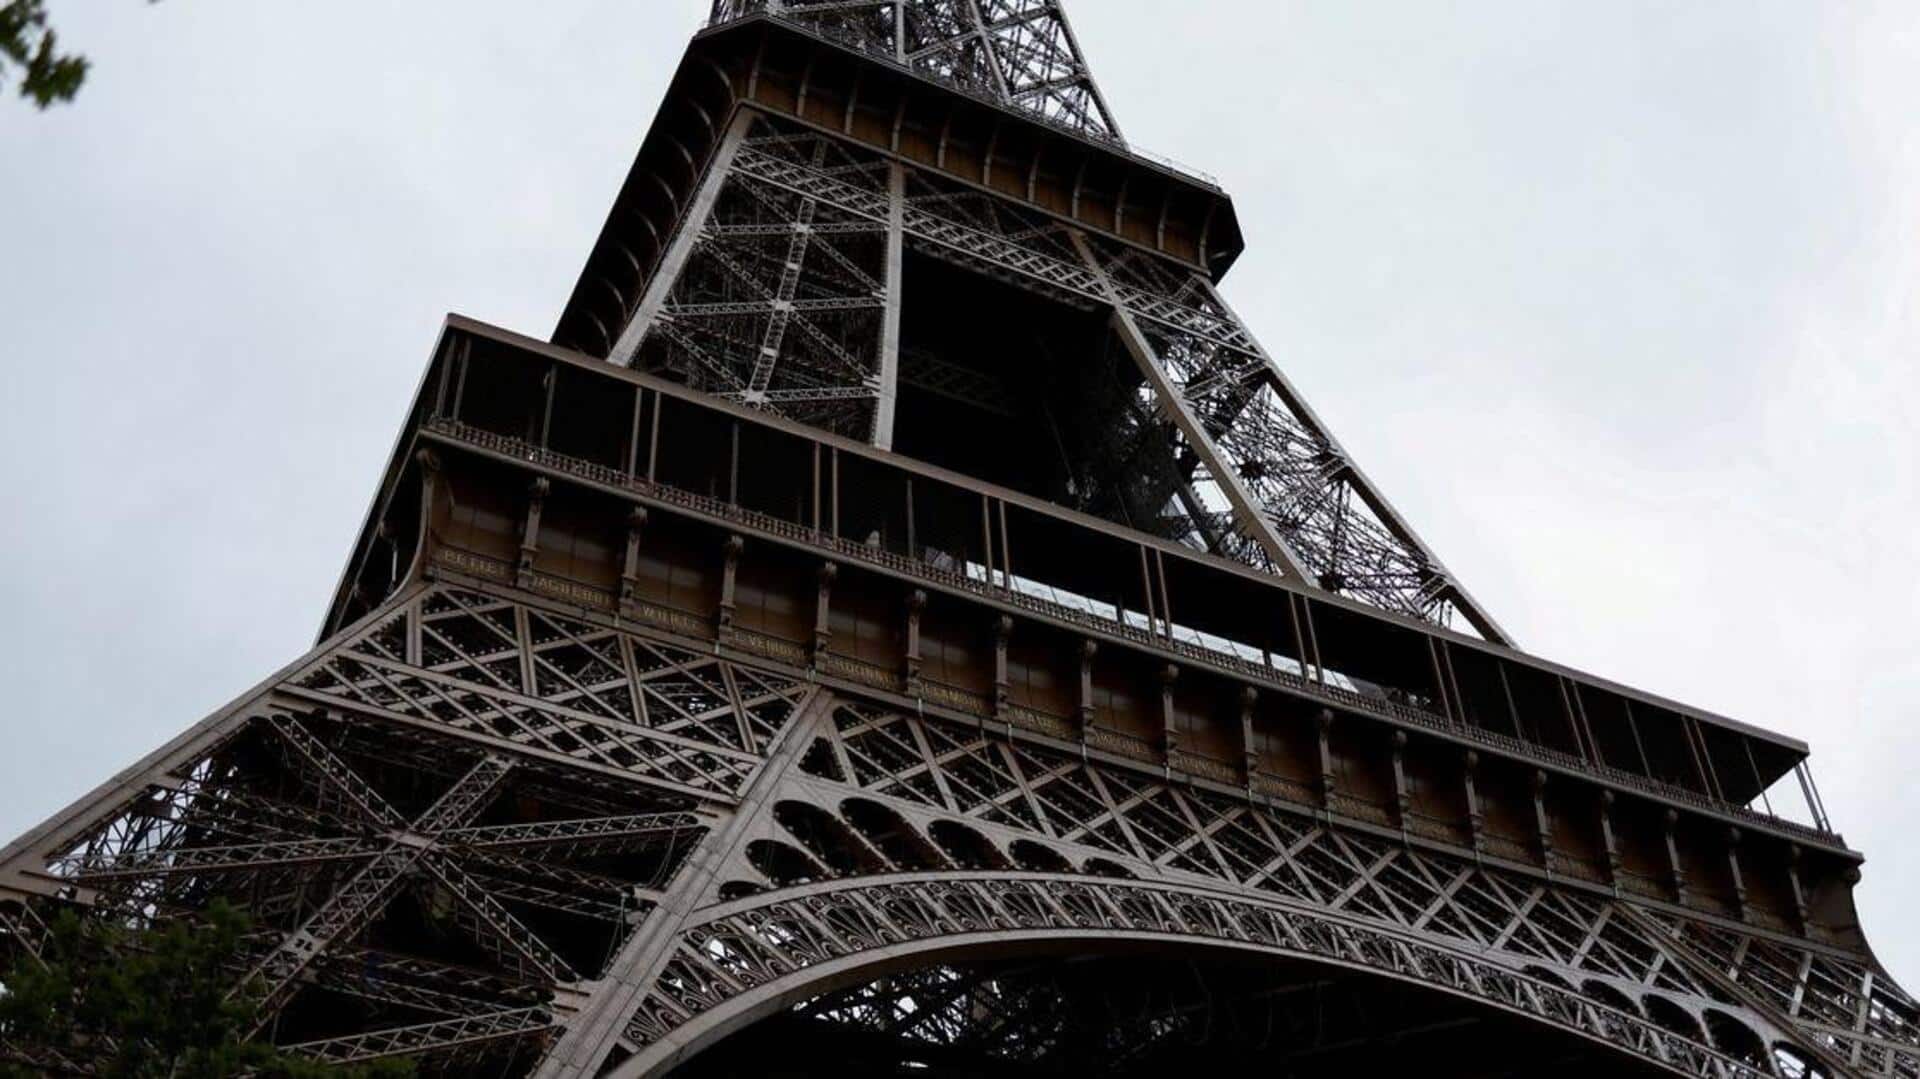 Paris: 3 floors of Eiffel Tower evacuated after bomb threat